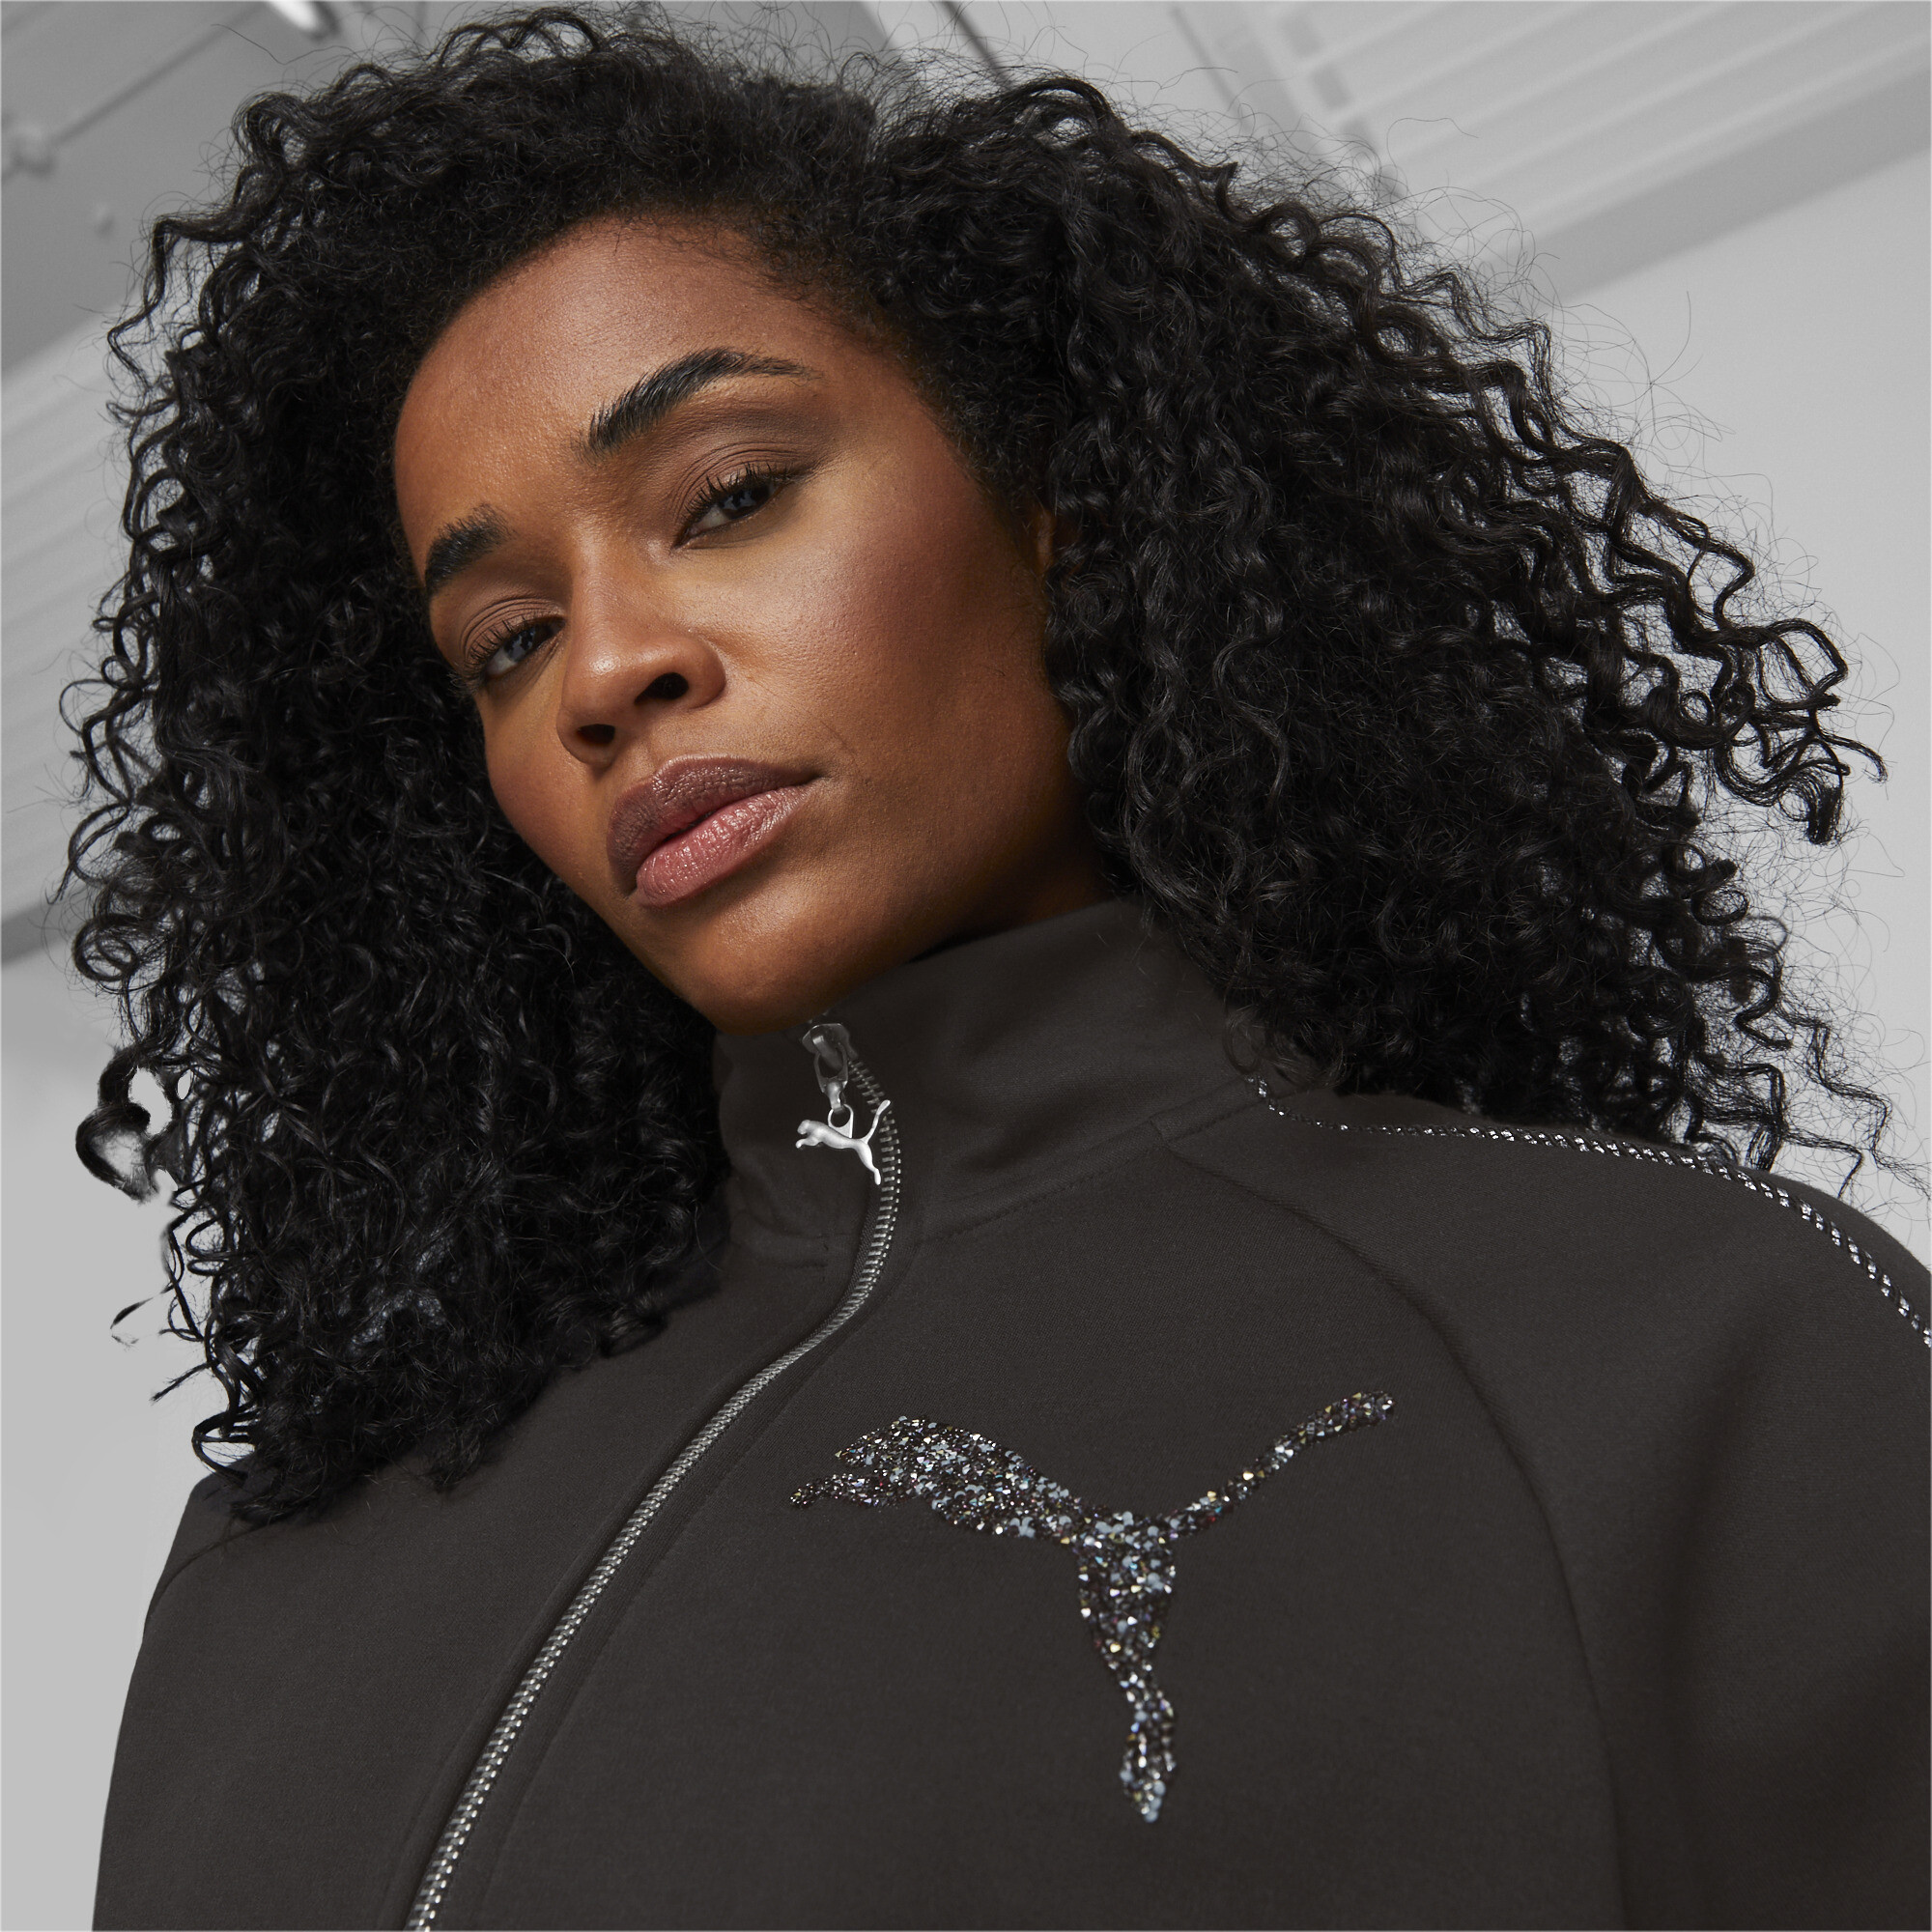 Women's PUMA Swarovski Crystals T7 Track Jacket In Black, Size Medium